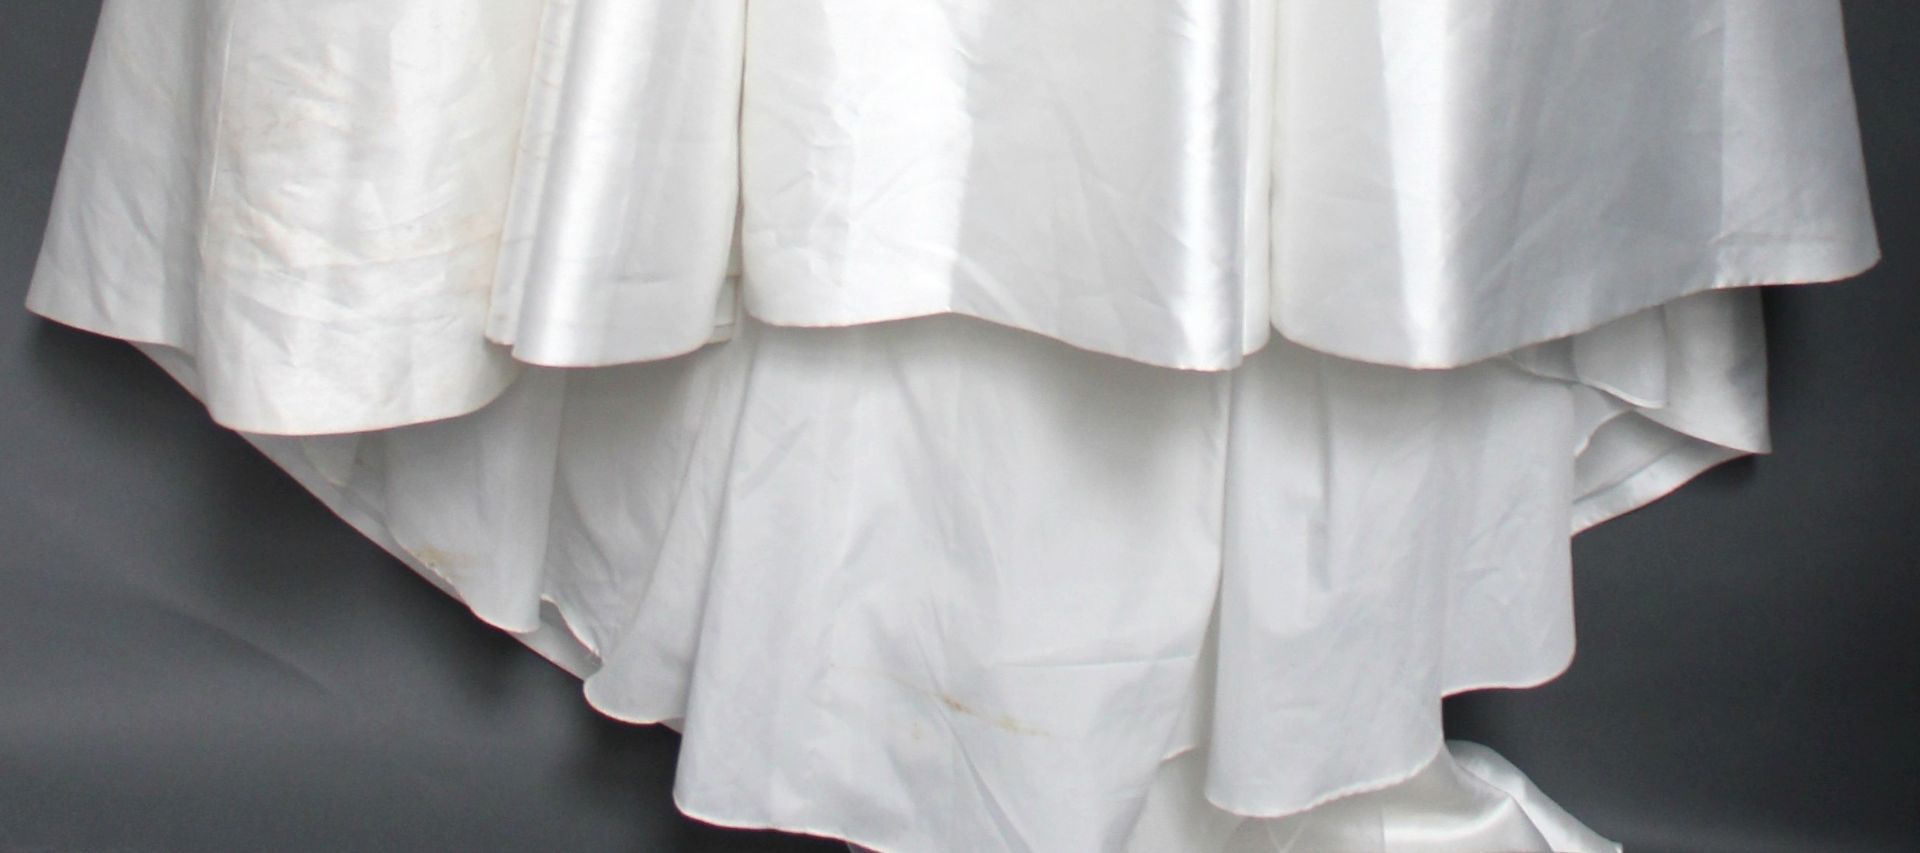 1 x ATELIER LYANA 'Mary' Lace And Delicately Beaded Designer Wedding Dress RRP £1,000 UK12 - Image 2 of 8